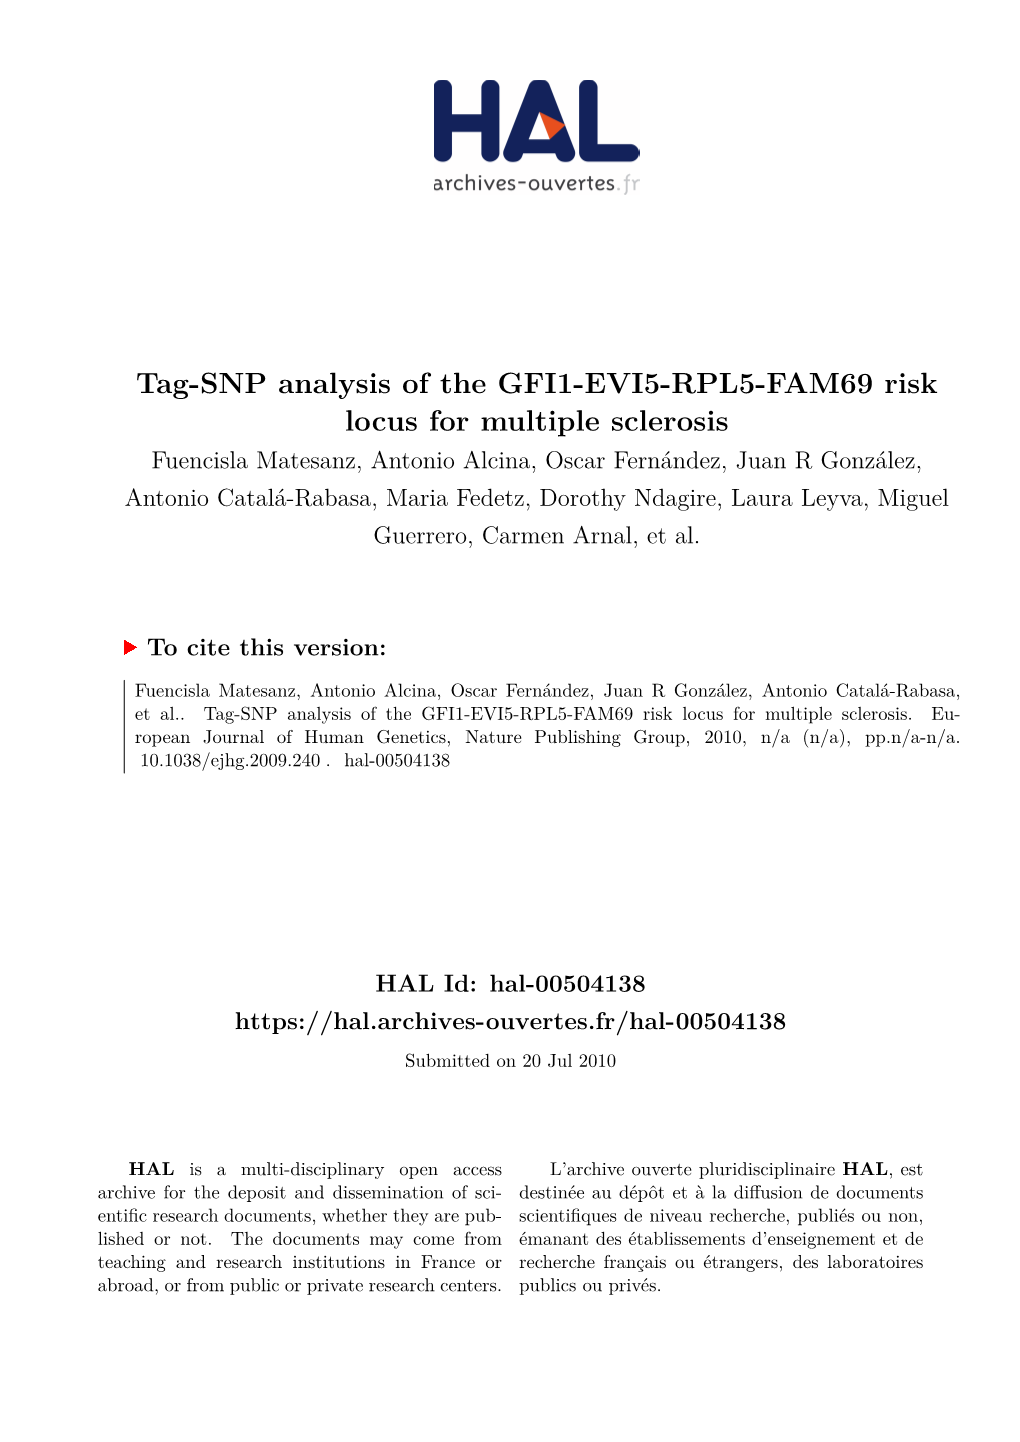 Tag-SNP Analysis of the GFI1-EVI5-RPL5-FAM69 Risk Locus